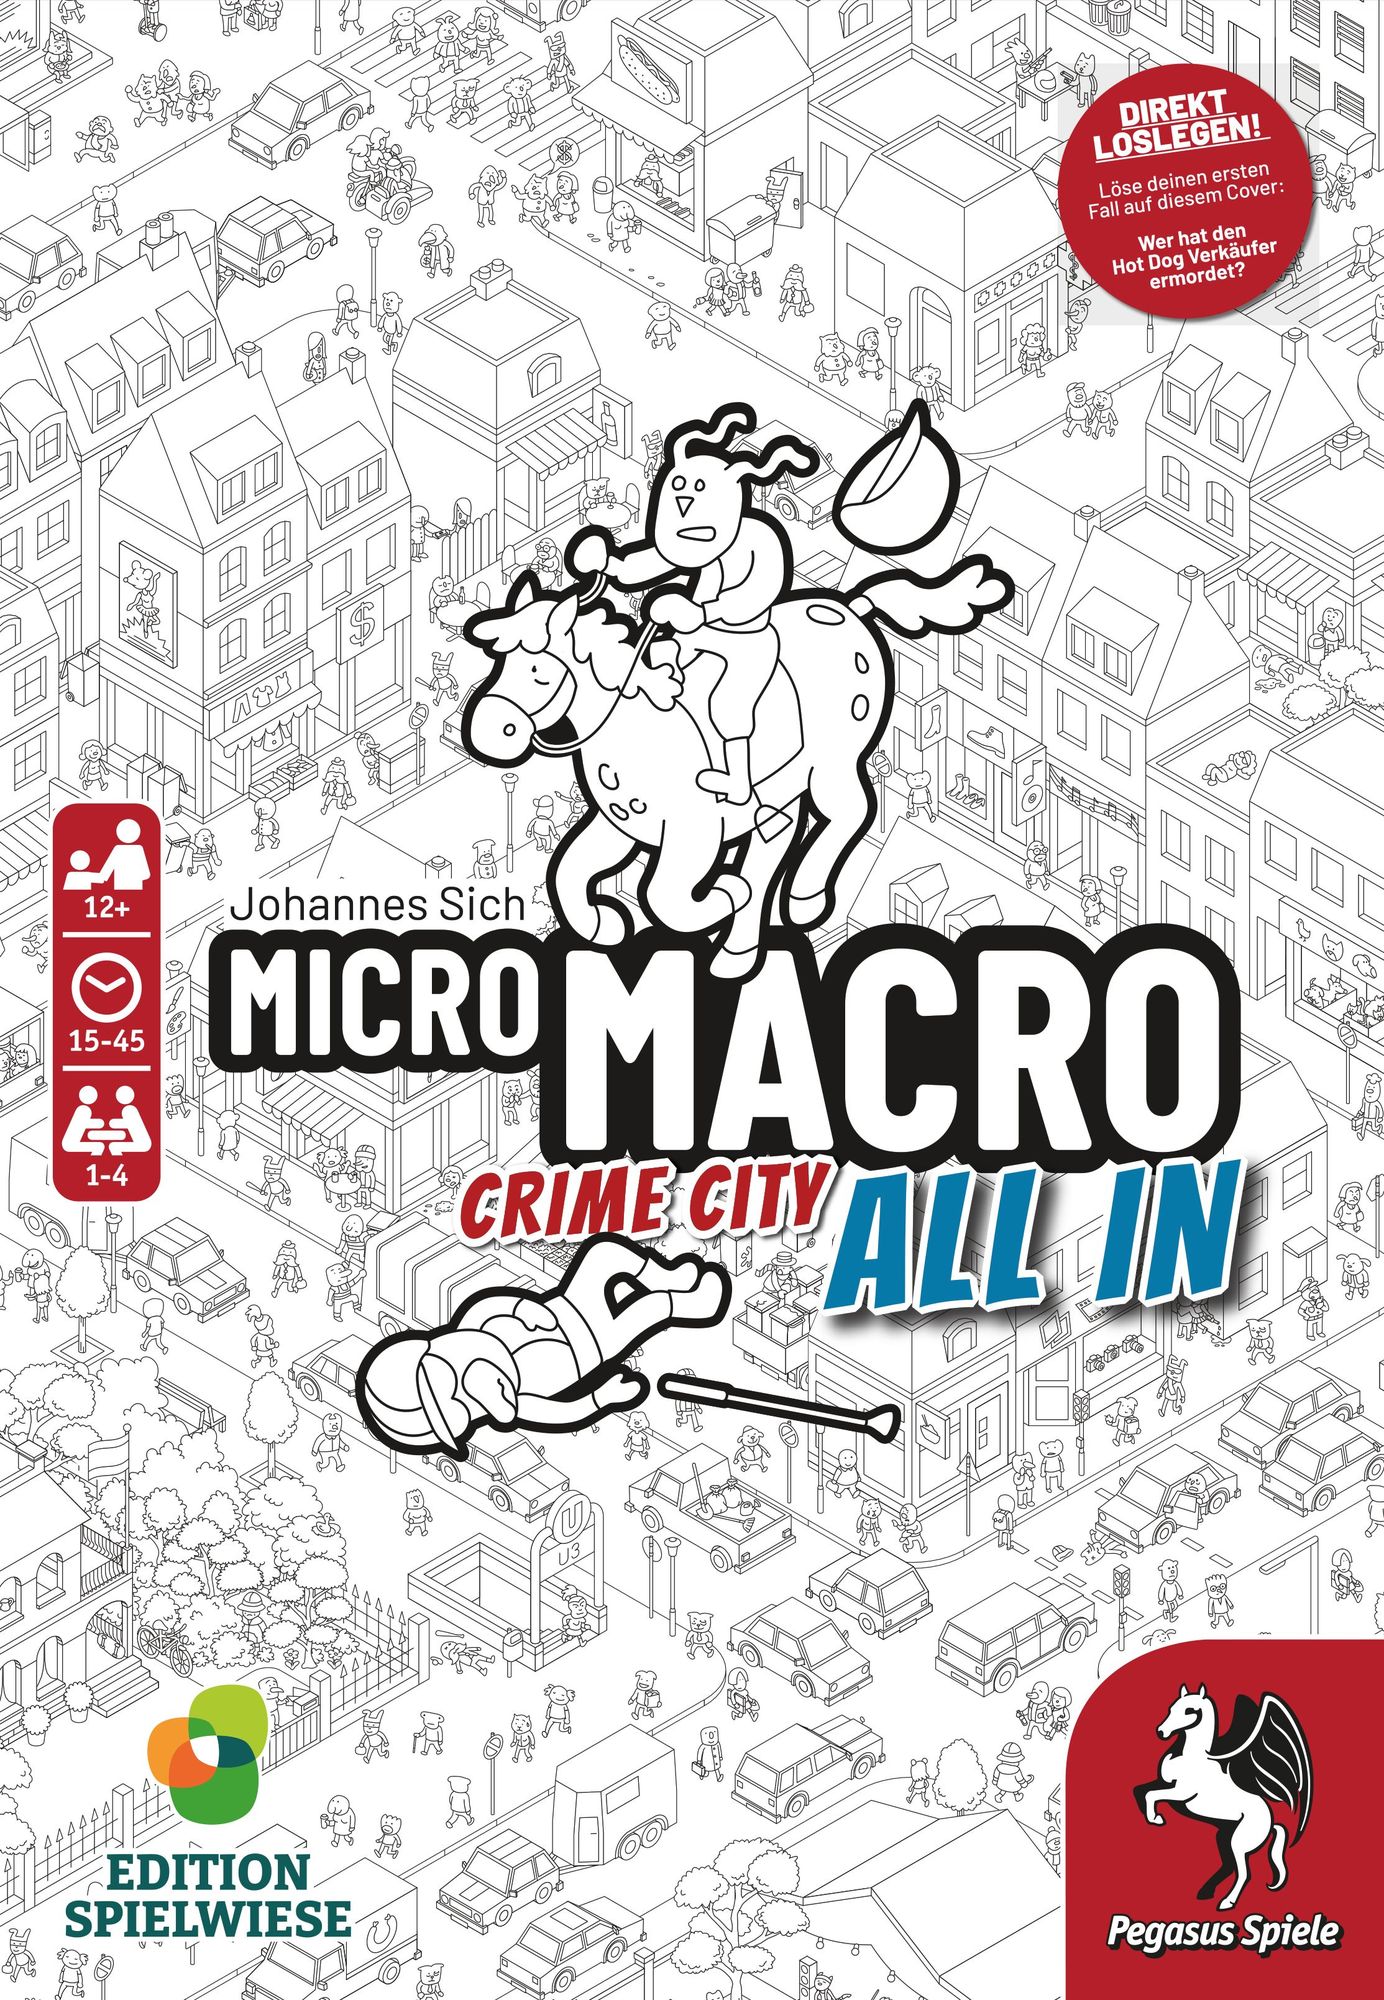 MicroMacro: Crime City 3 All In (Spiel)' kaufen - Spielwaren